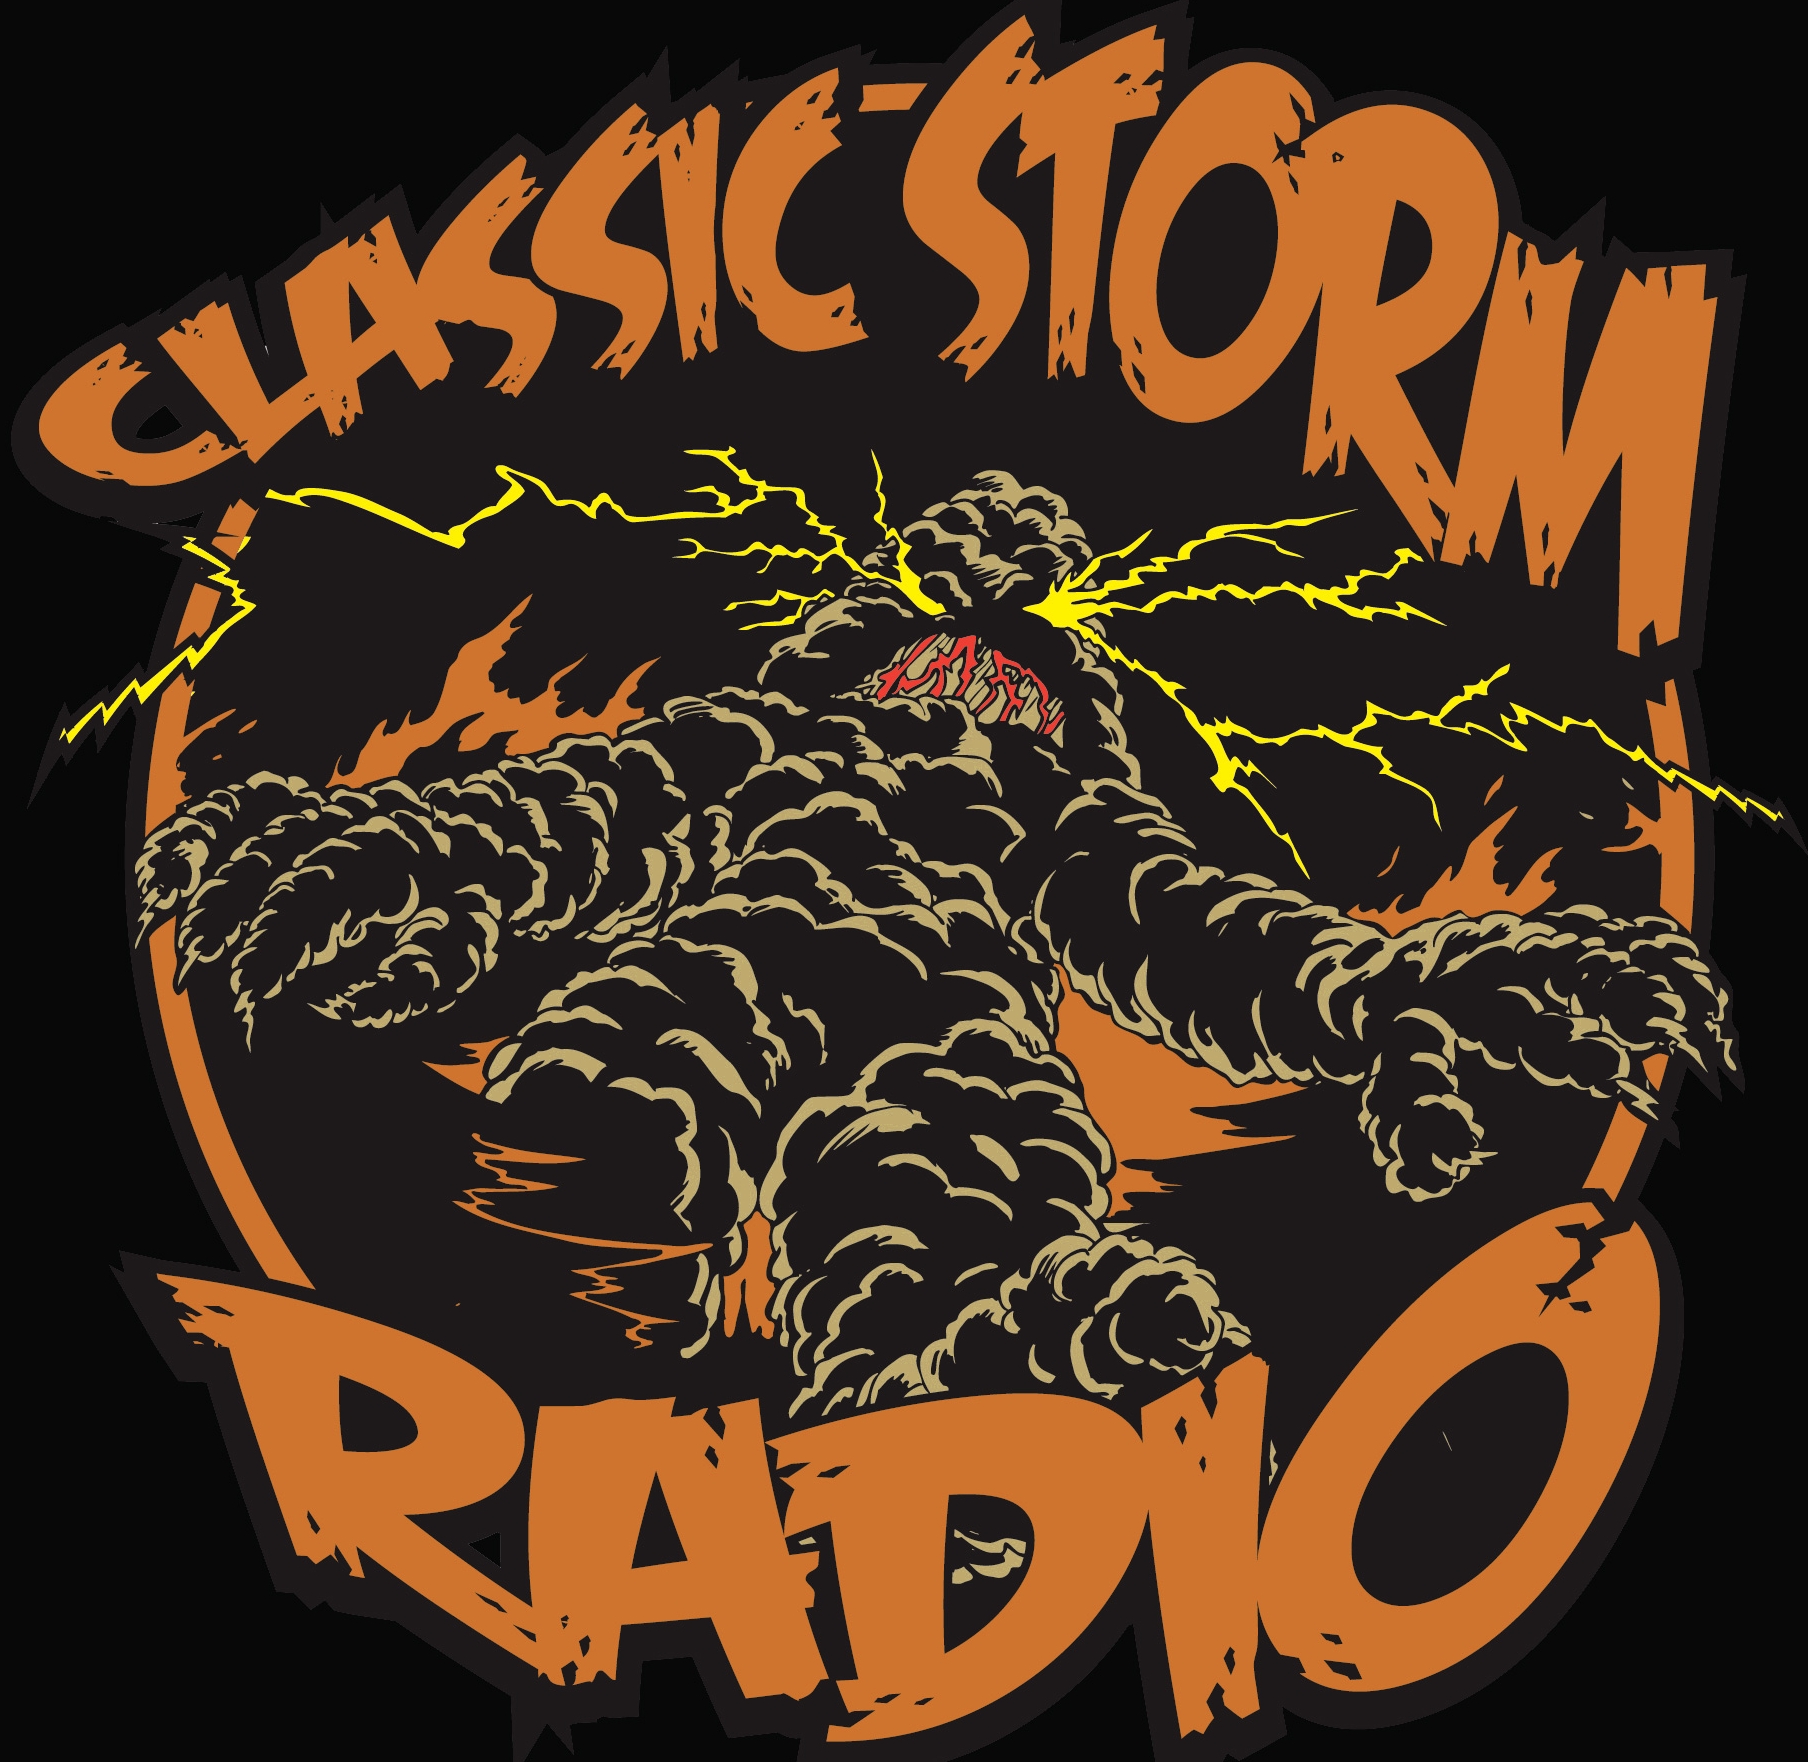 Classic Storm Radio